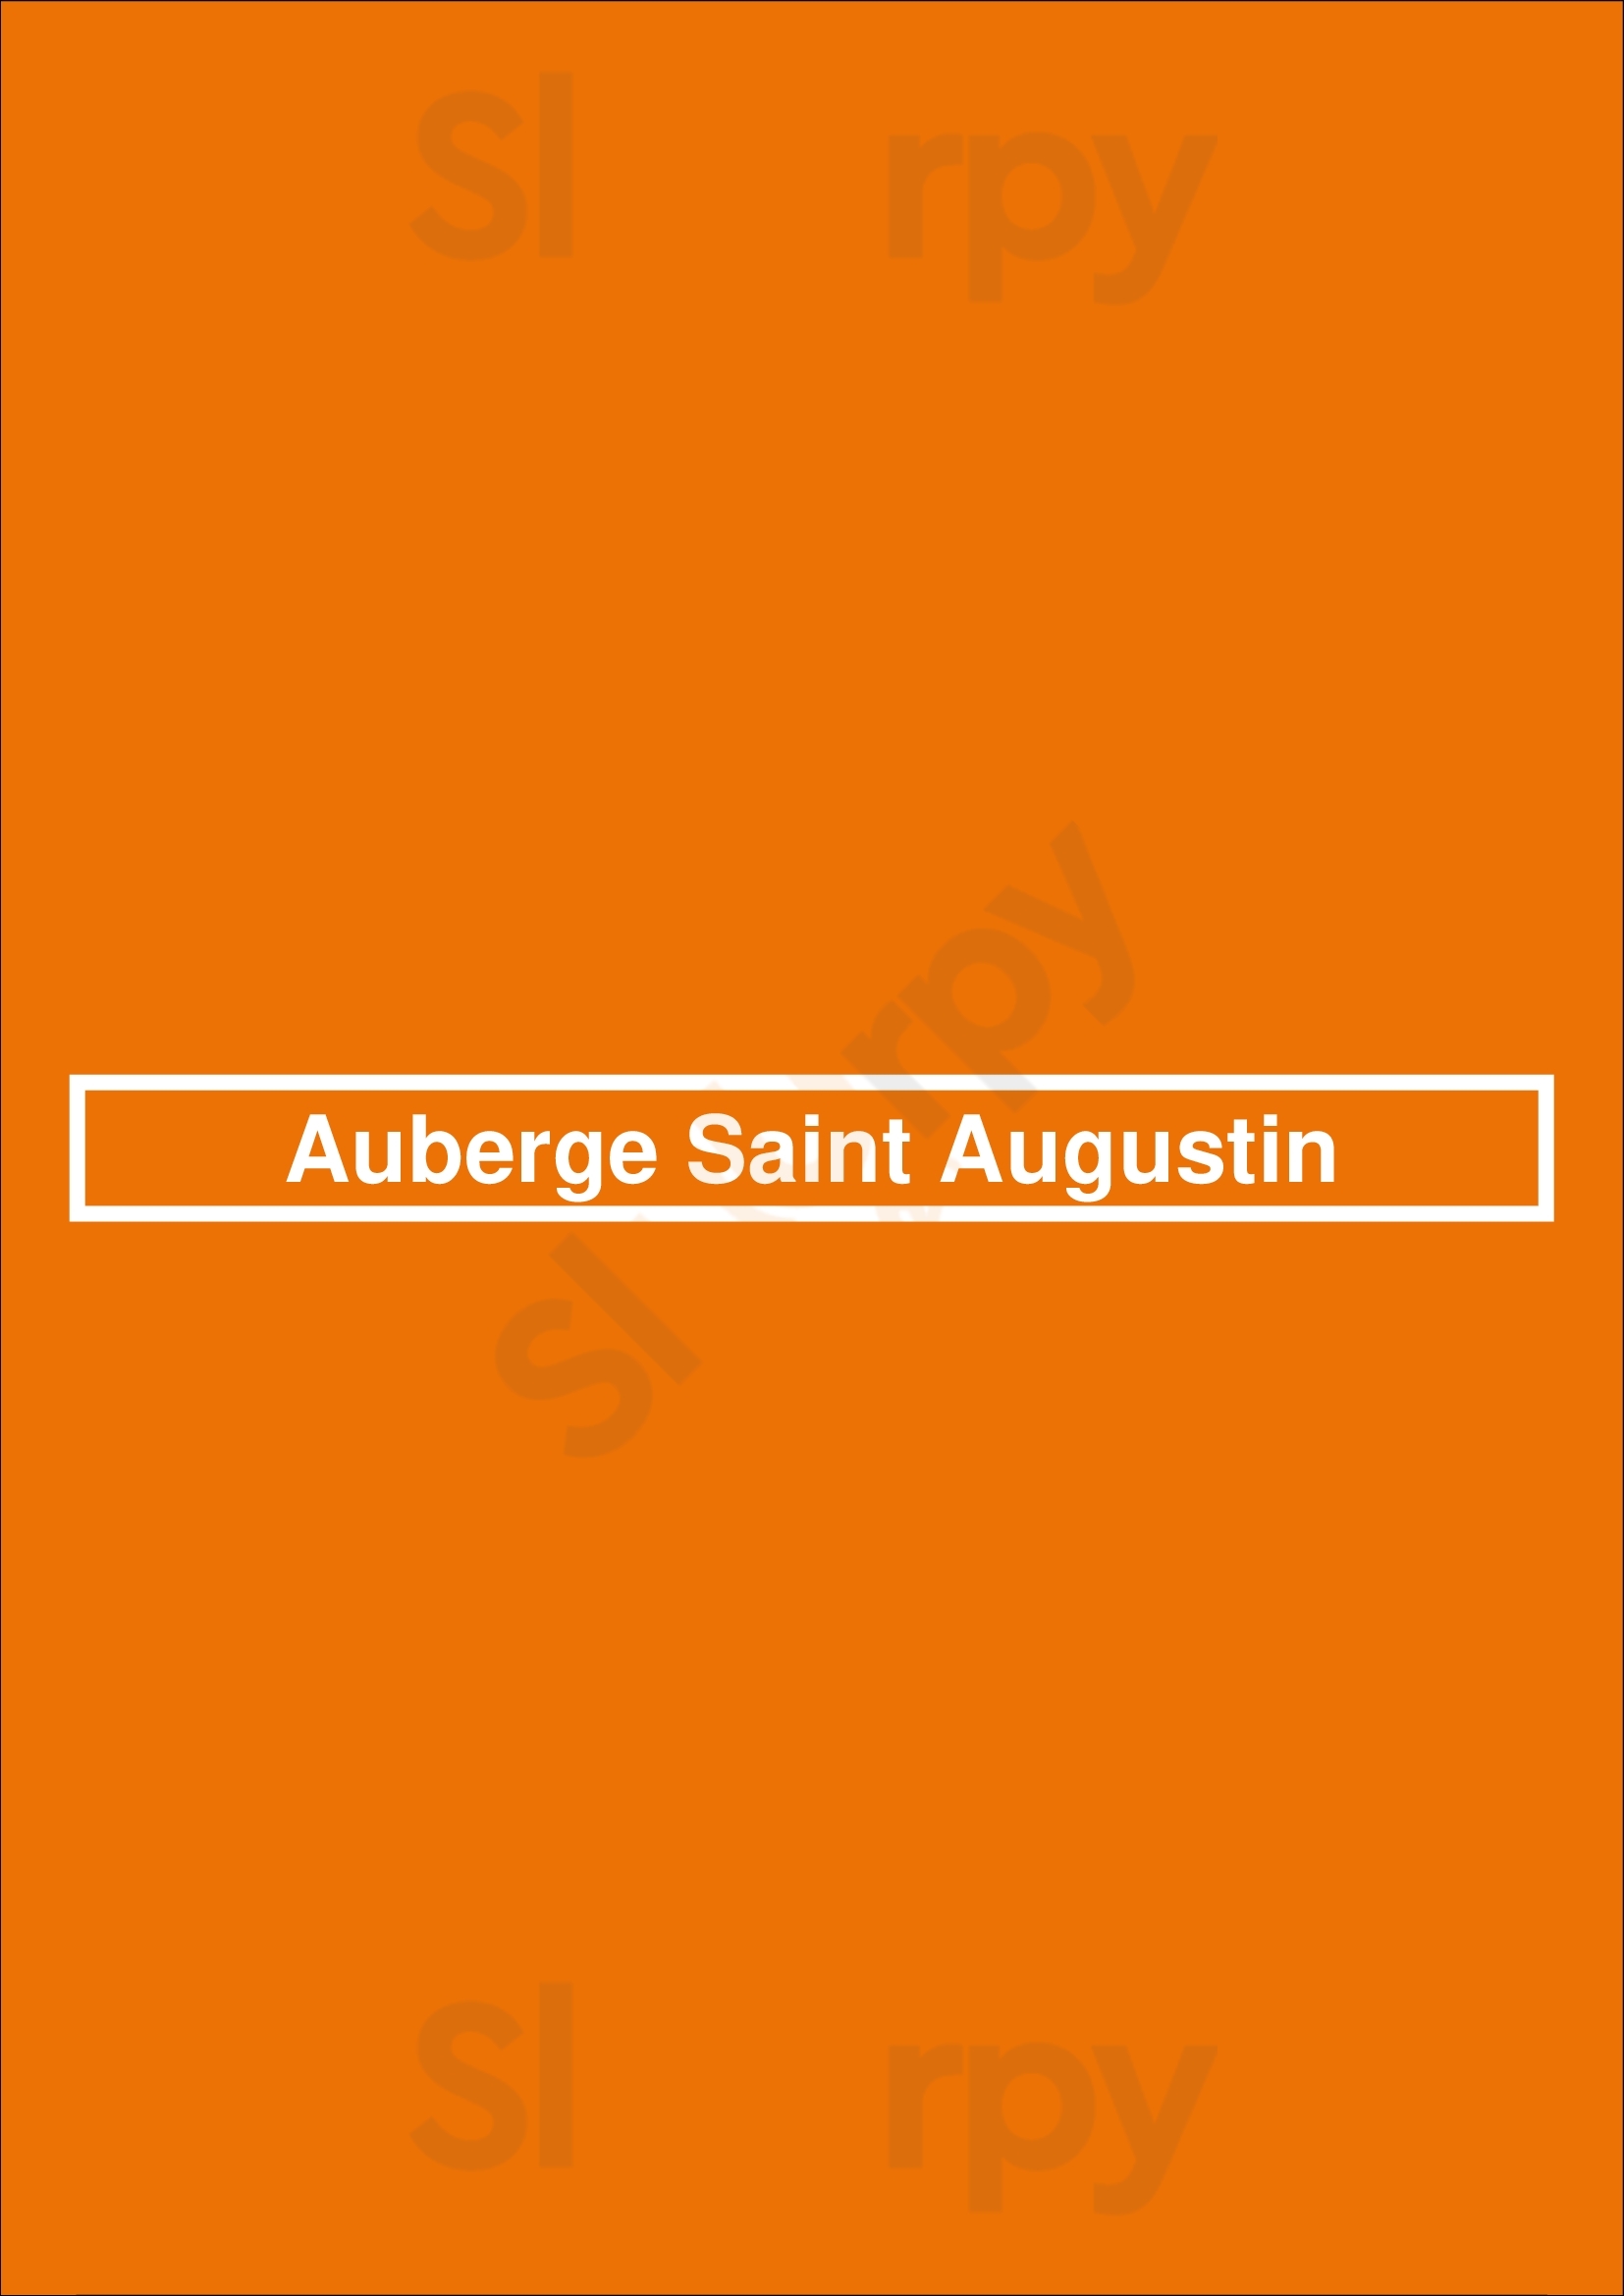 Auberge Saint Augustin Paris Menu - 1